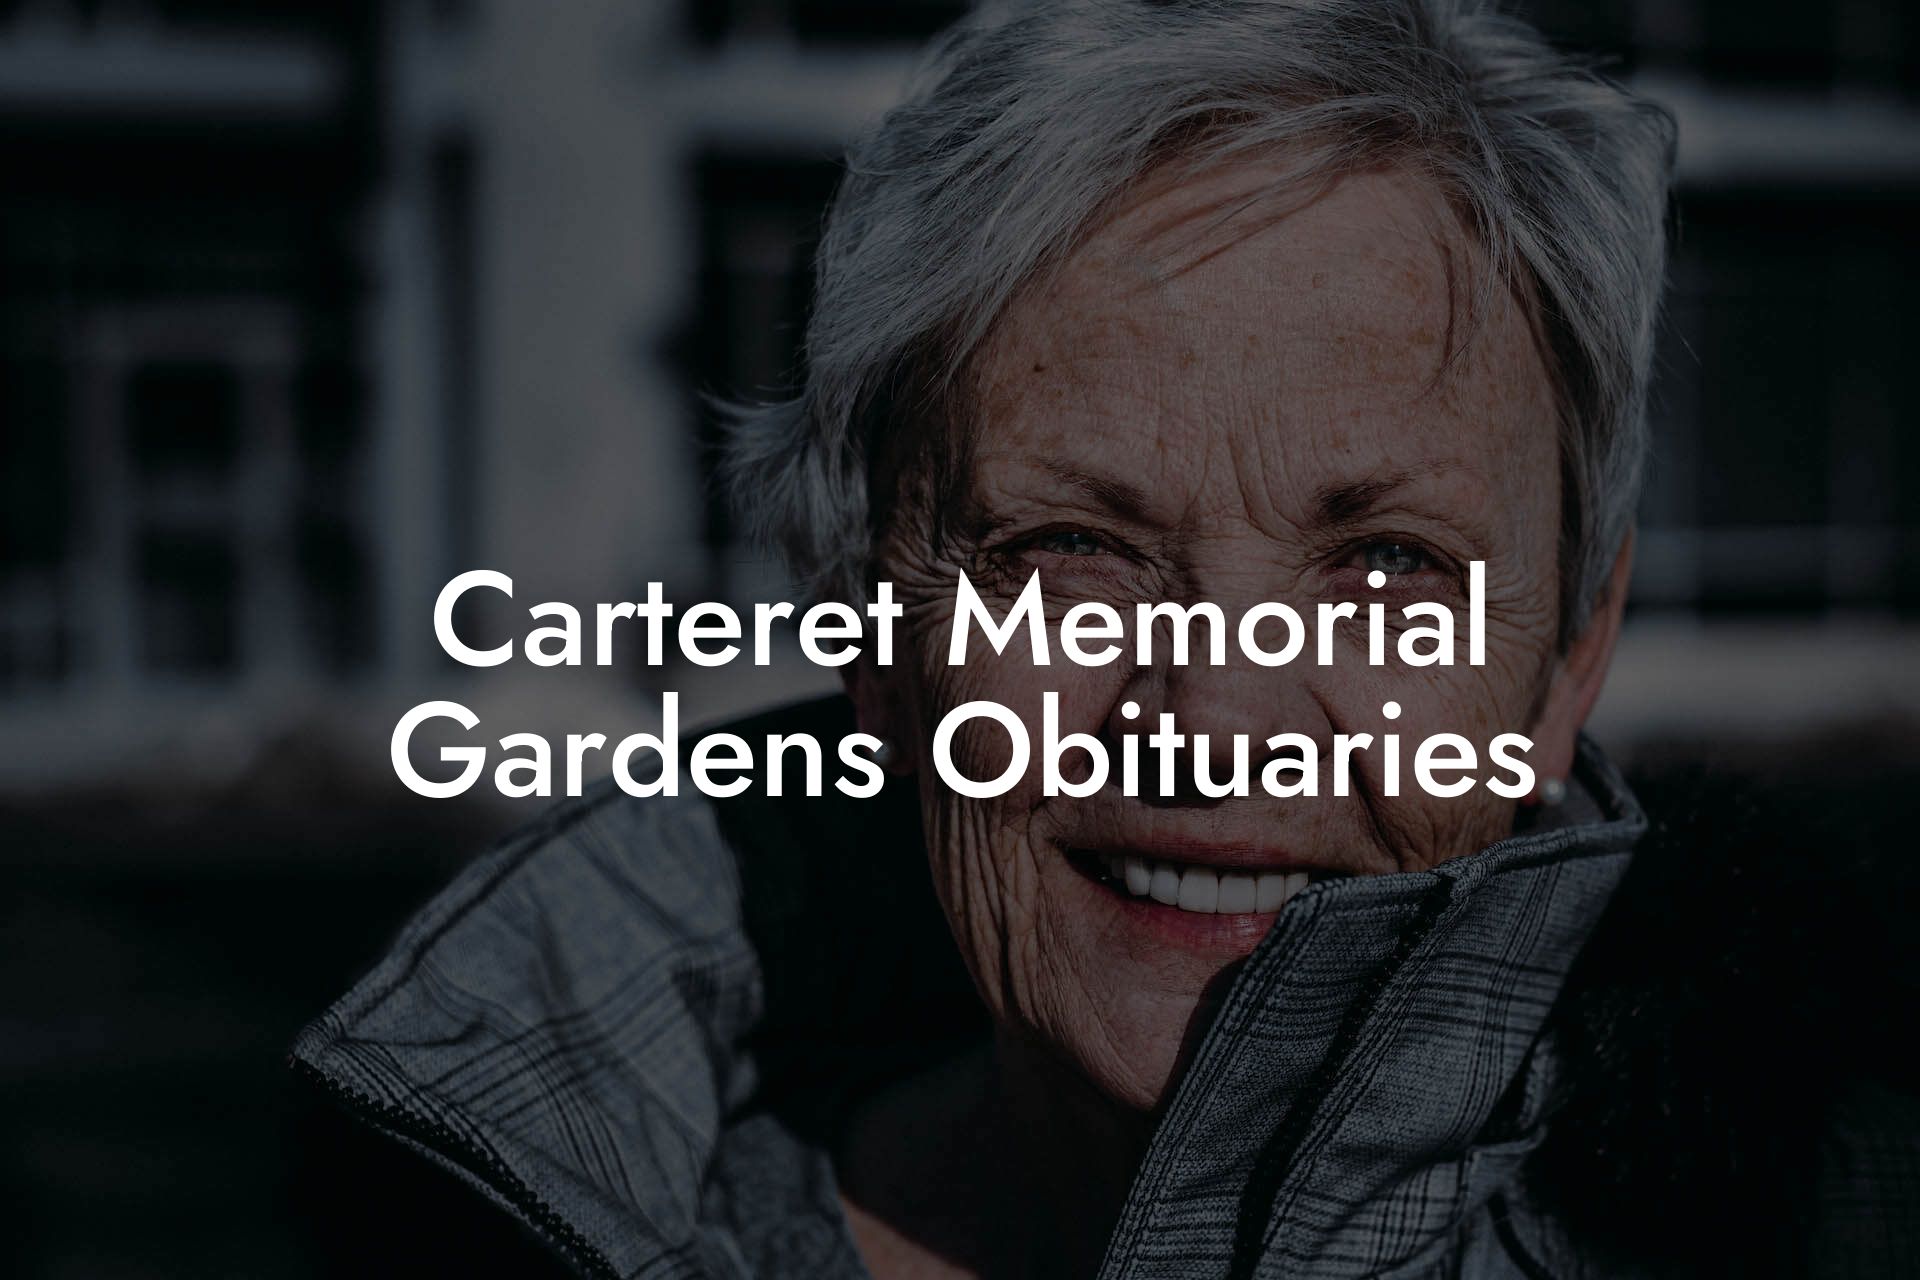 Carteret Memorial Gardens Obituaries